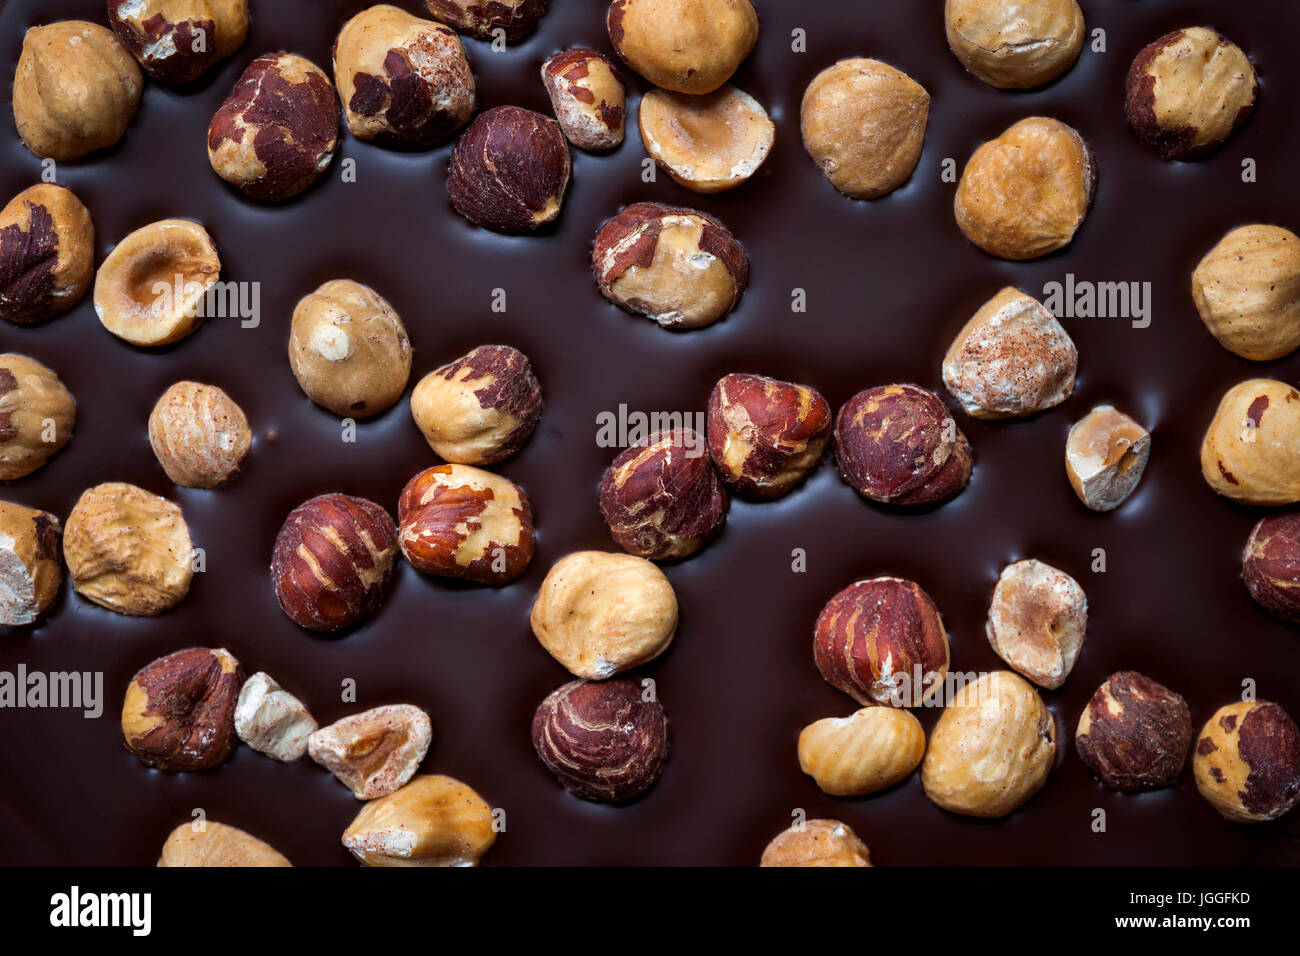 Artisanal dark chocolate bar with whole hazelnuts as background, closeup. Stock Photo